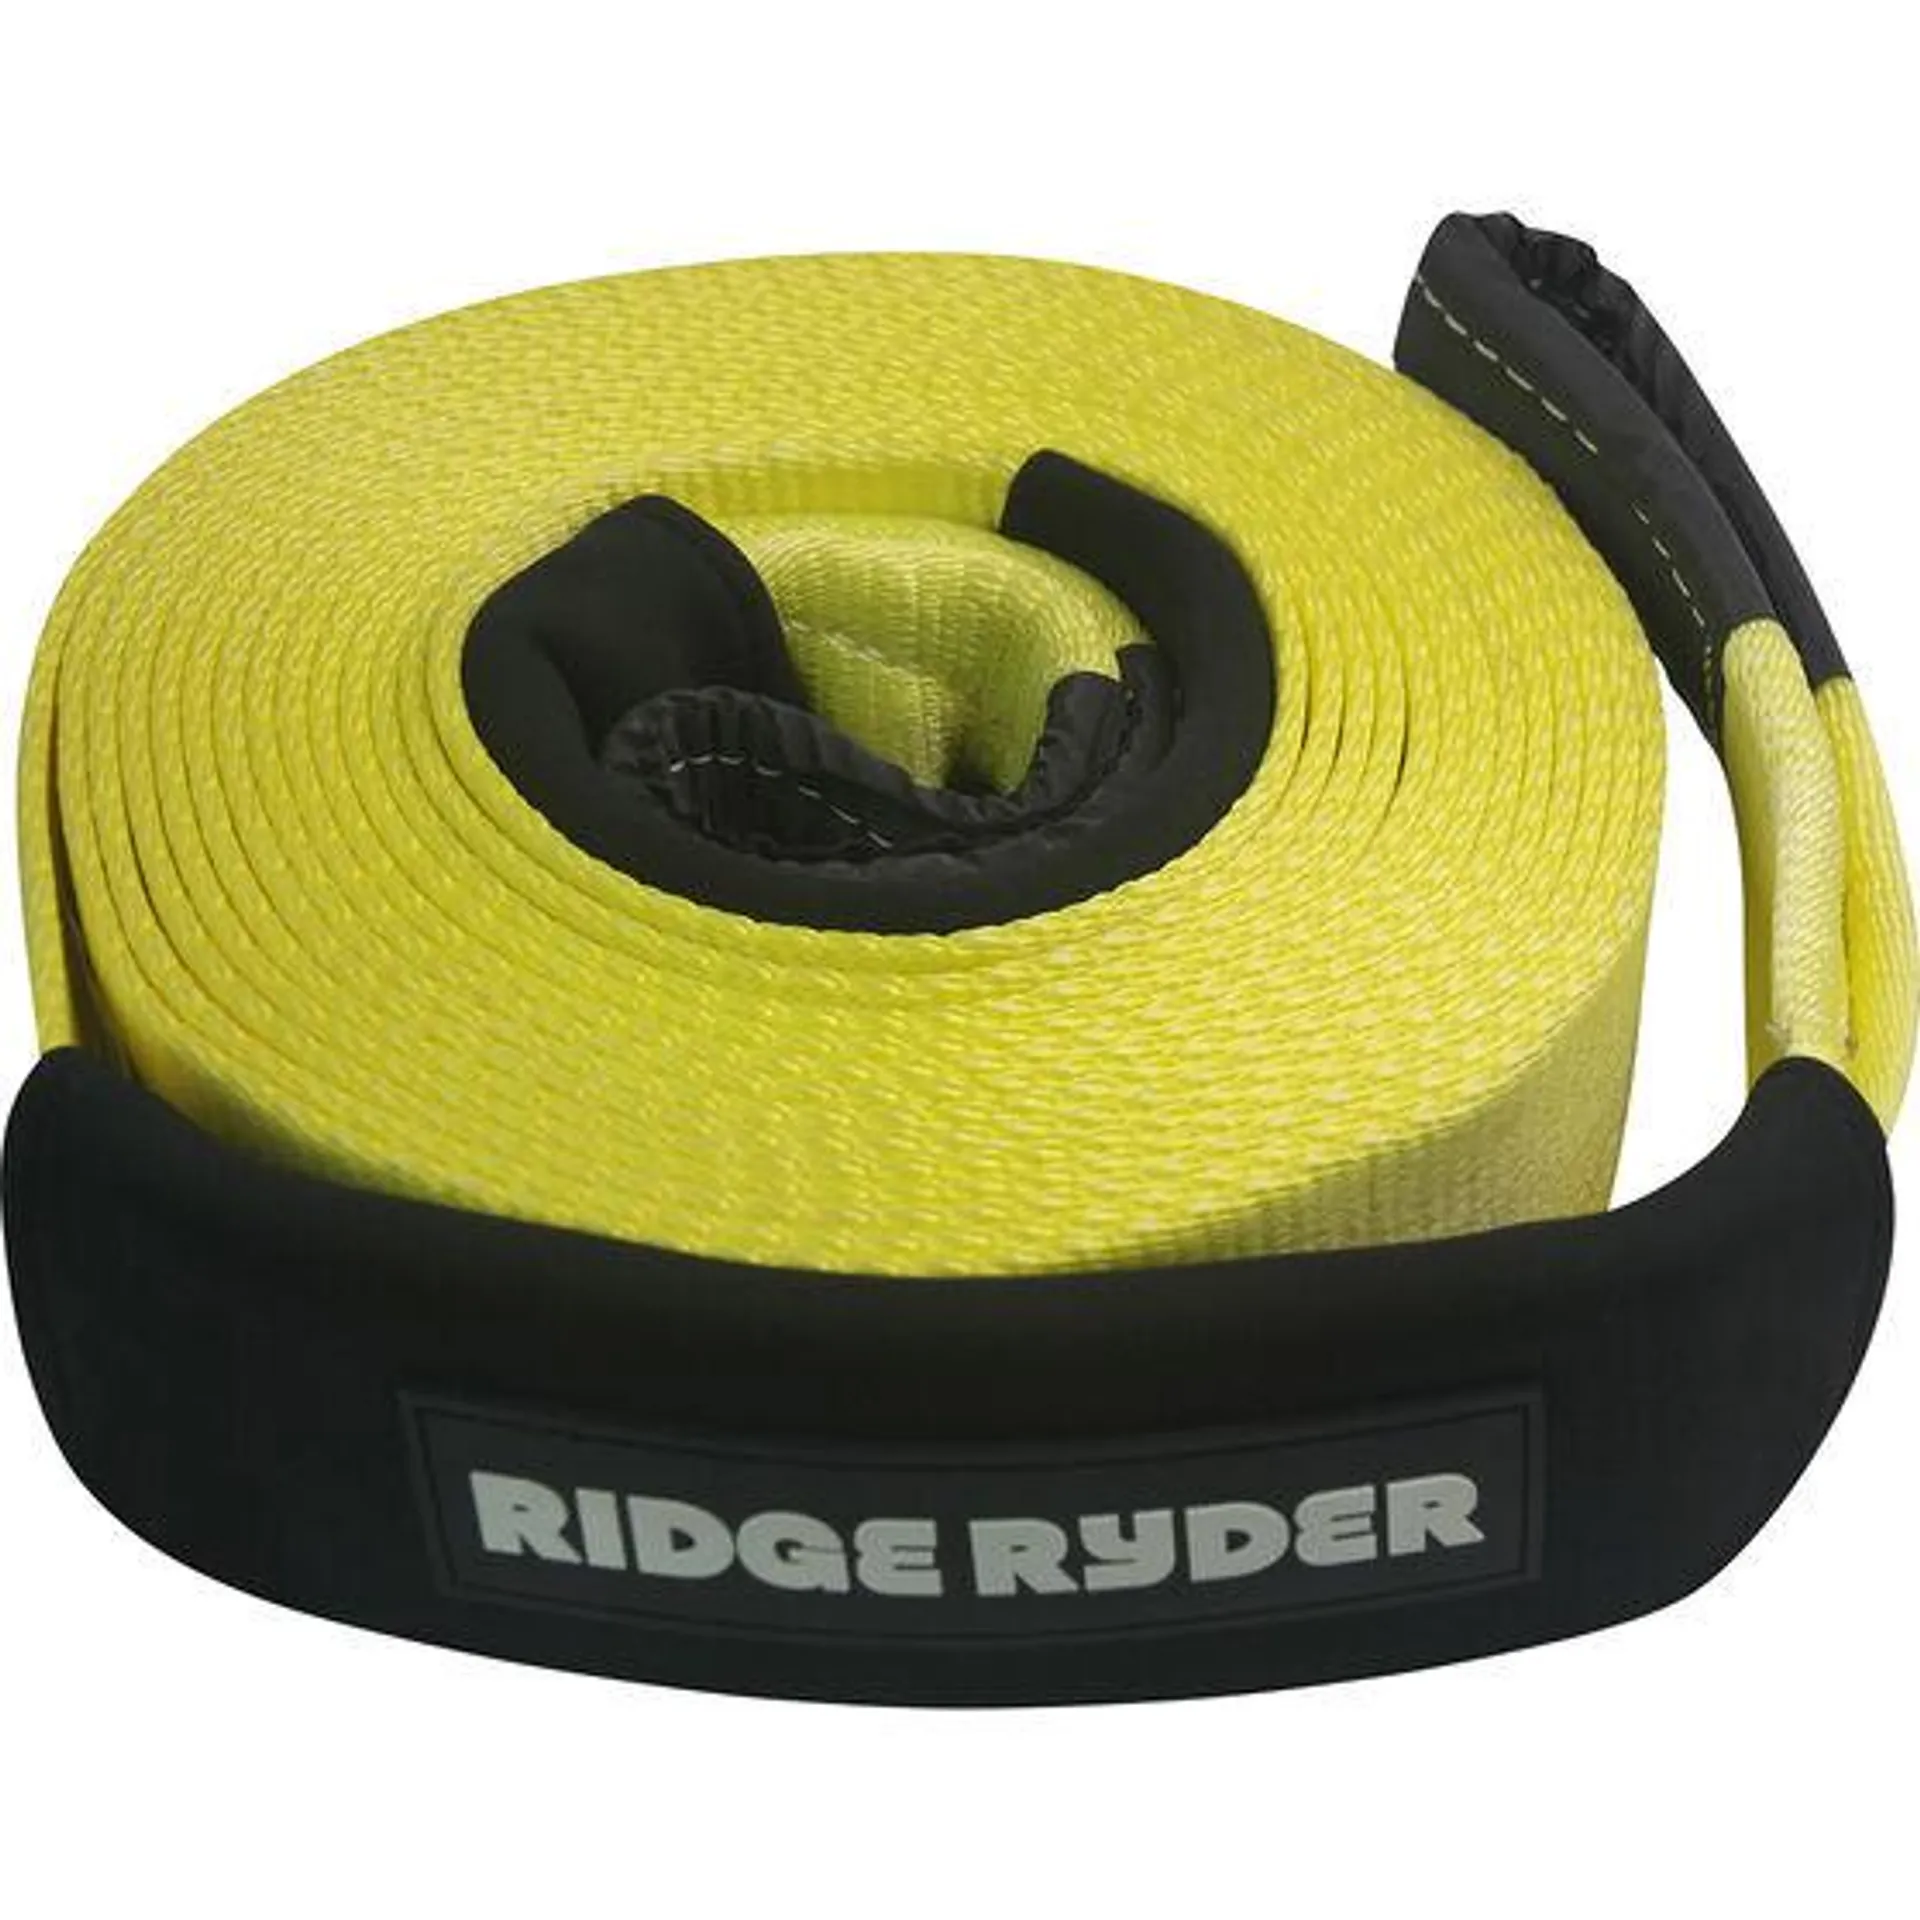 Ridge Ryder Snatch Strap 9m 11000kg